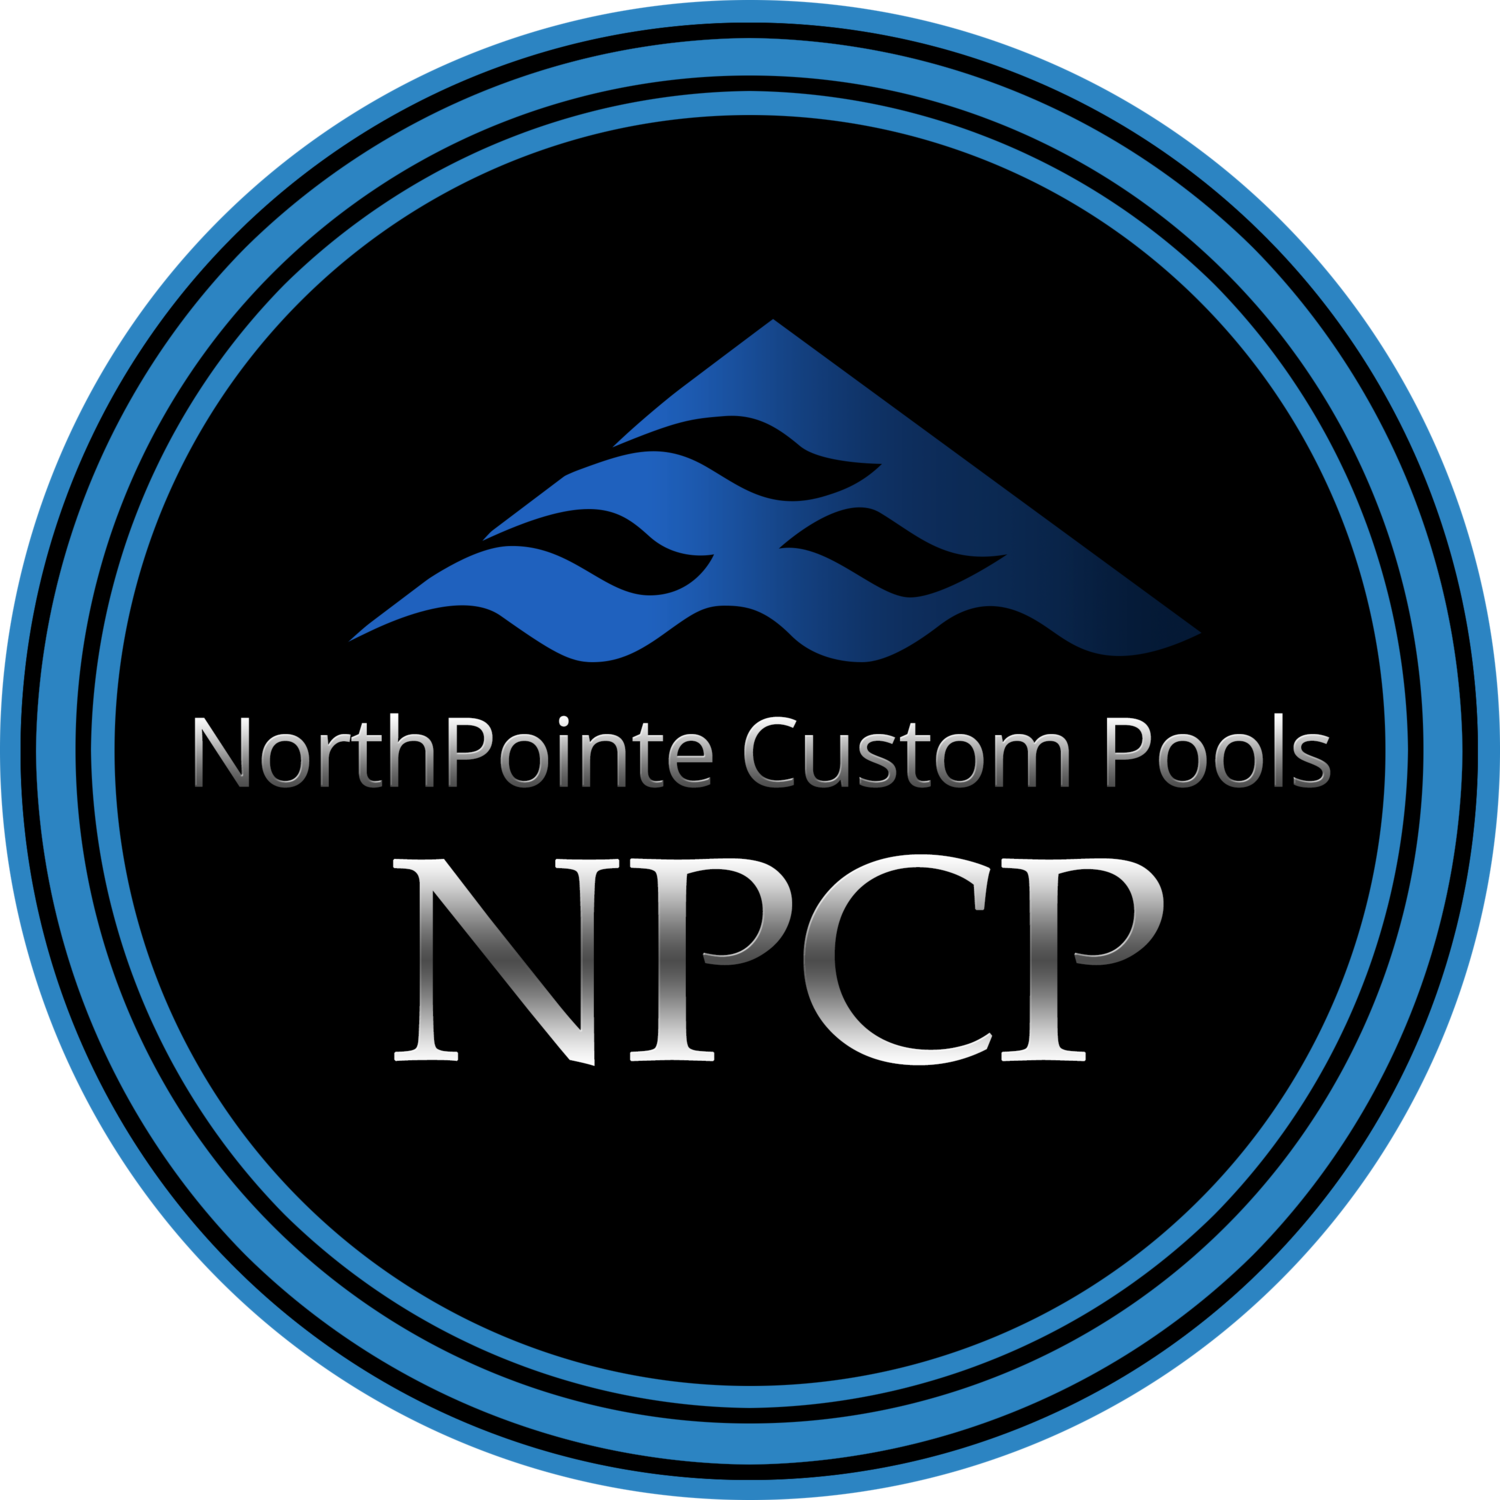 NorthPointe Custom Pools